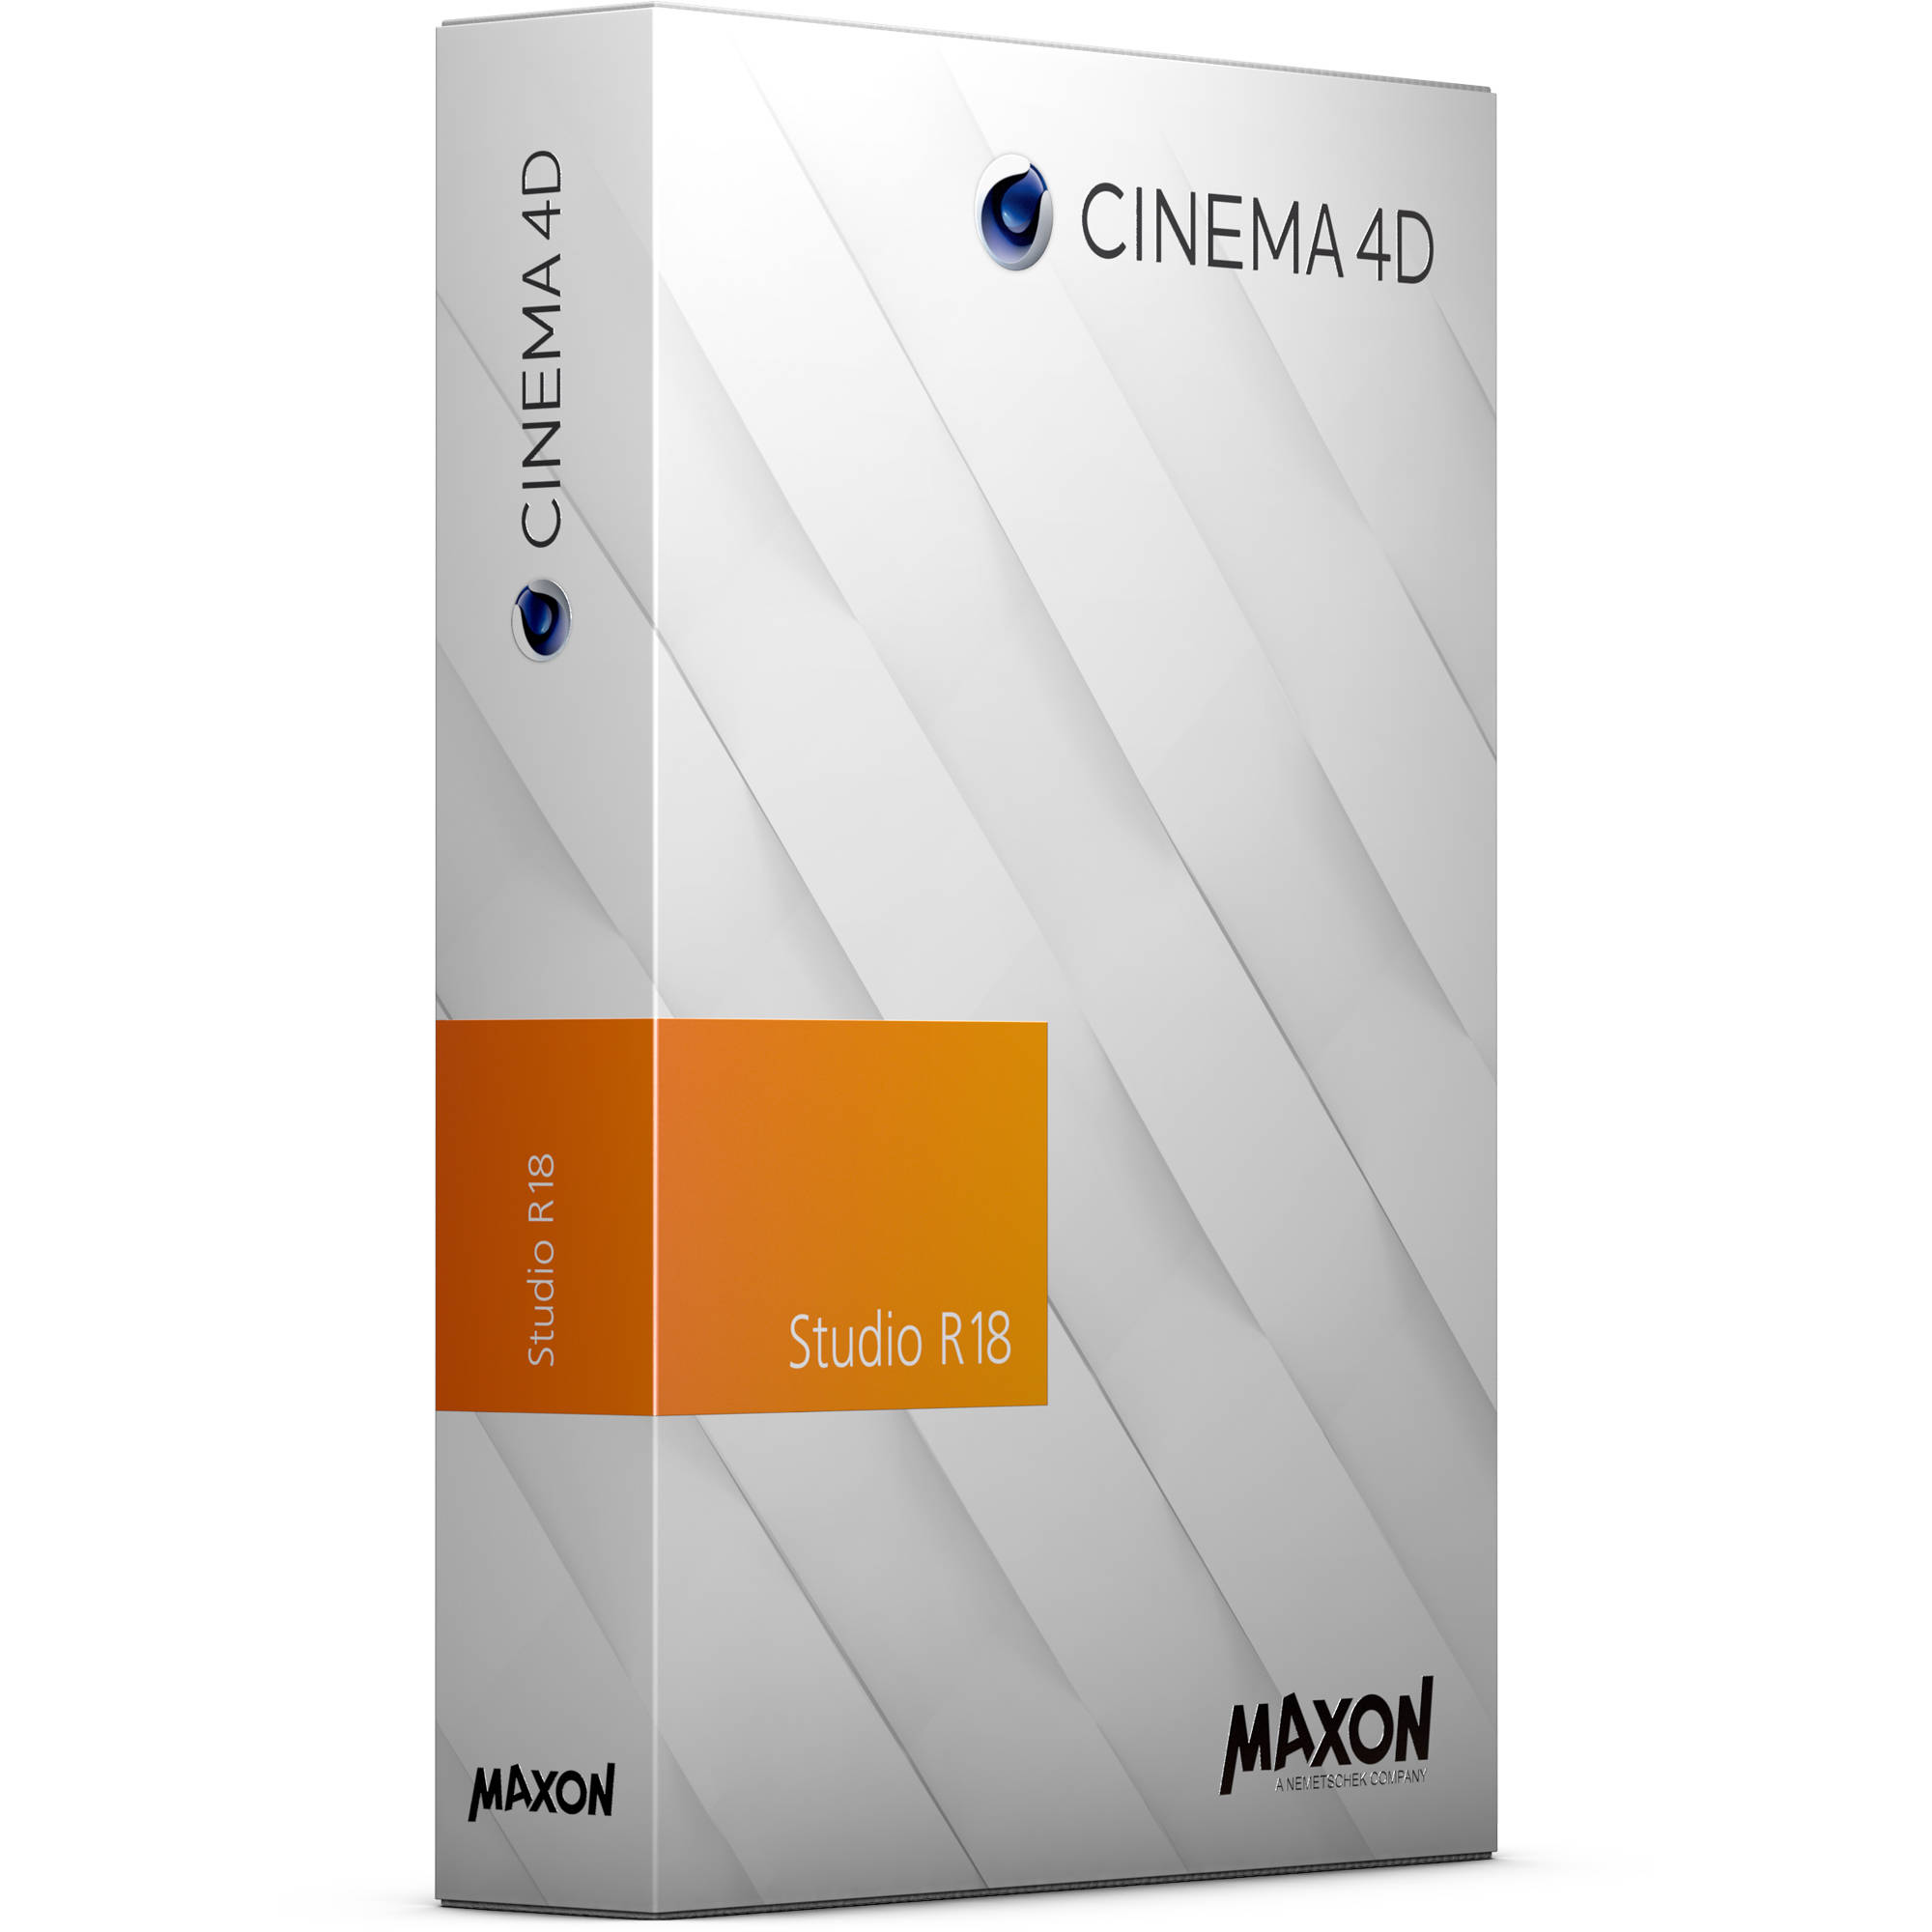 Maxon Cinema 4D Studio R17 64 bit